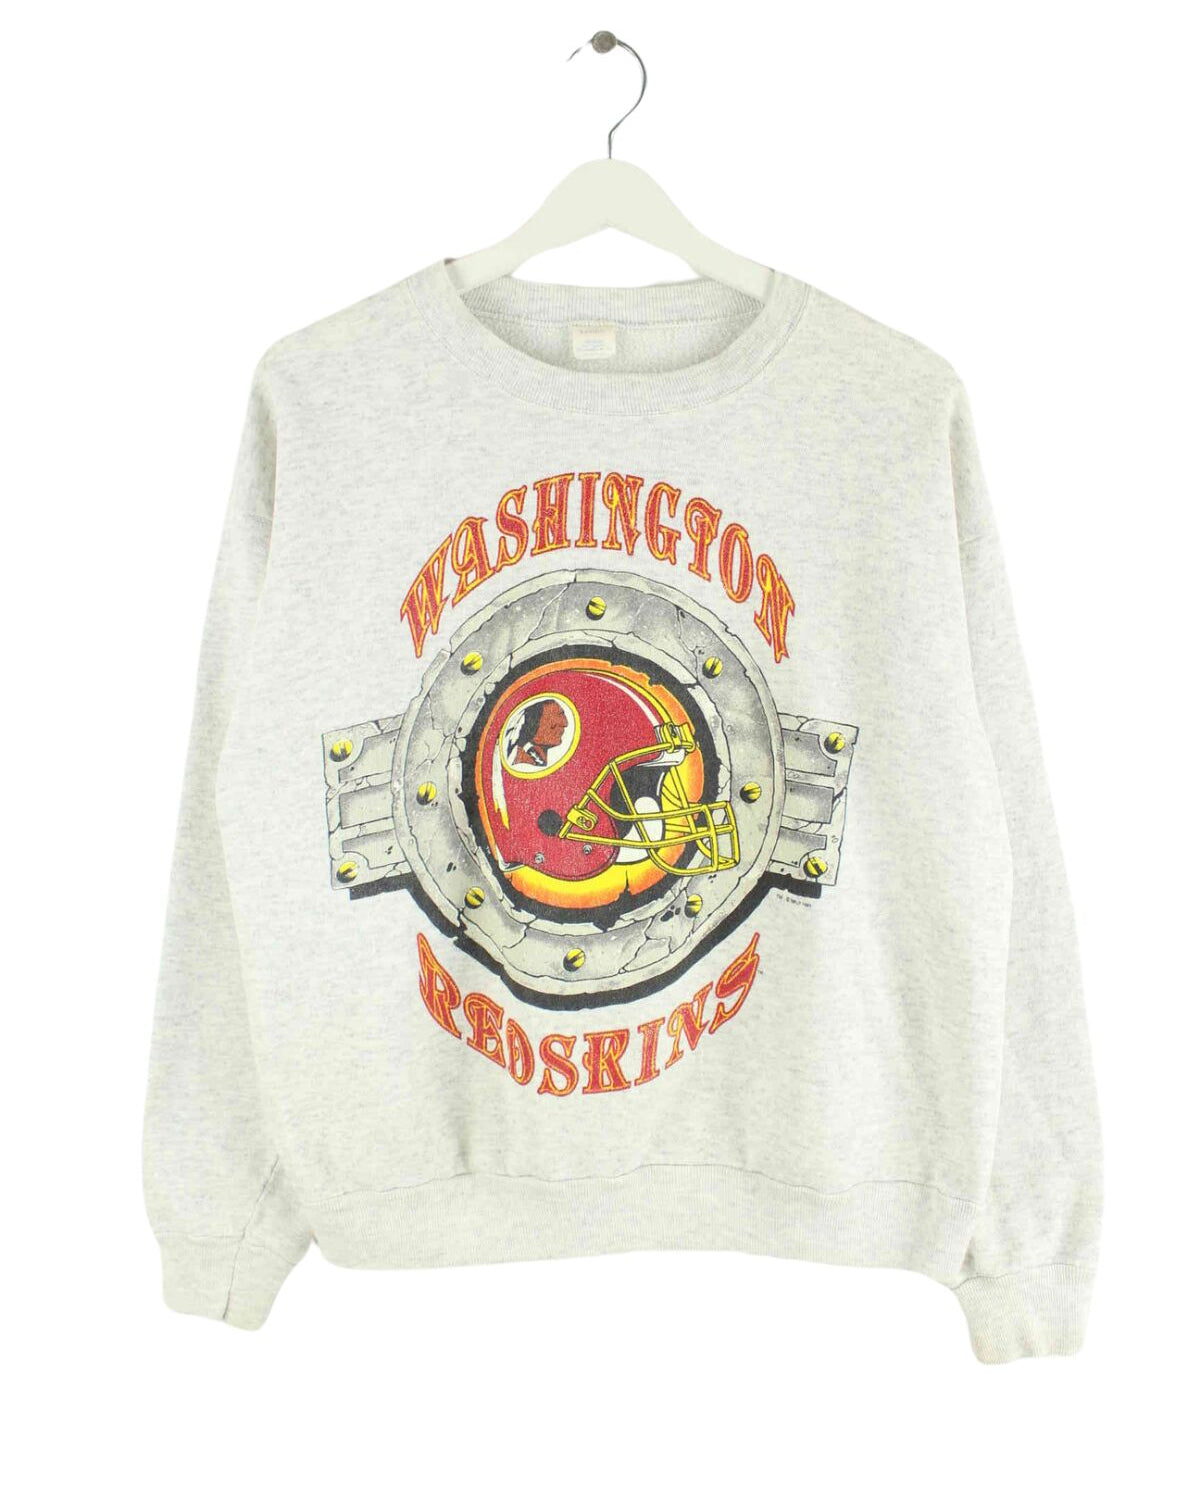 Vintage Damen 1991 Washington Redskins Sweater Grau S (front image)